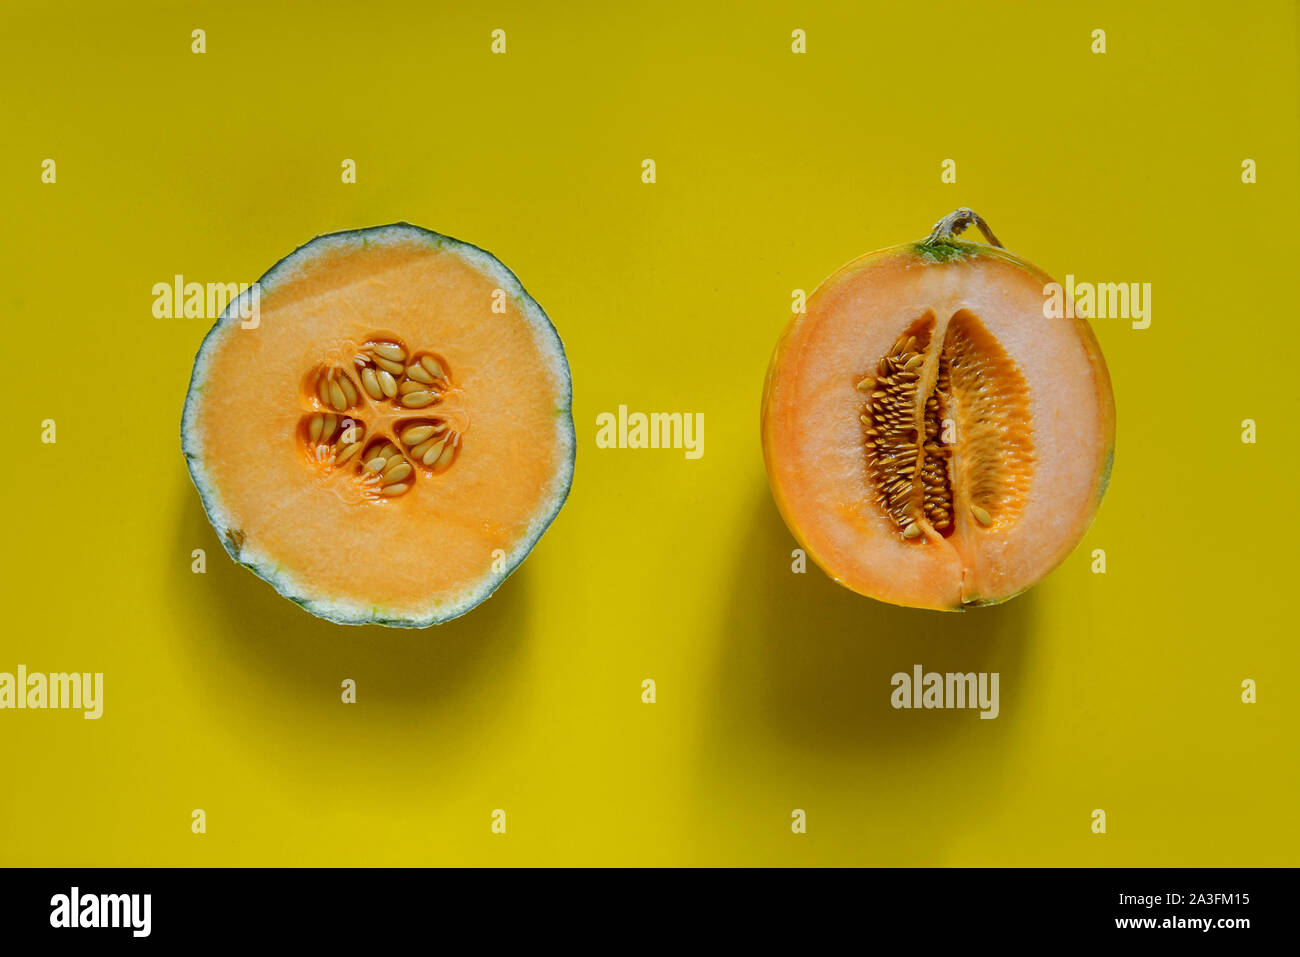 Cantaloupe sliced in half with whole cantaloupe isolated on yellow background Stock Photo